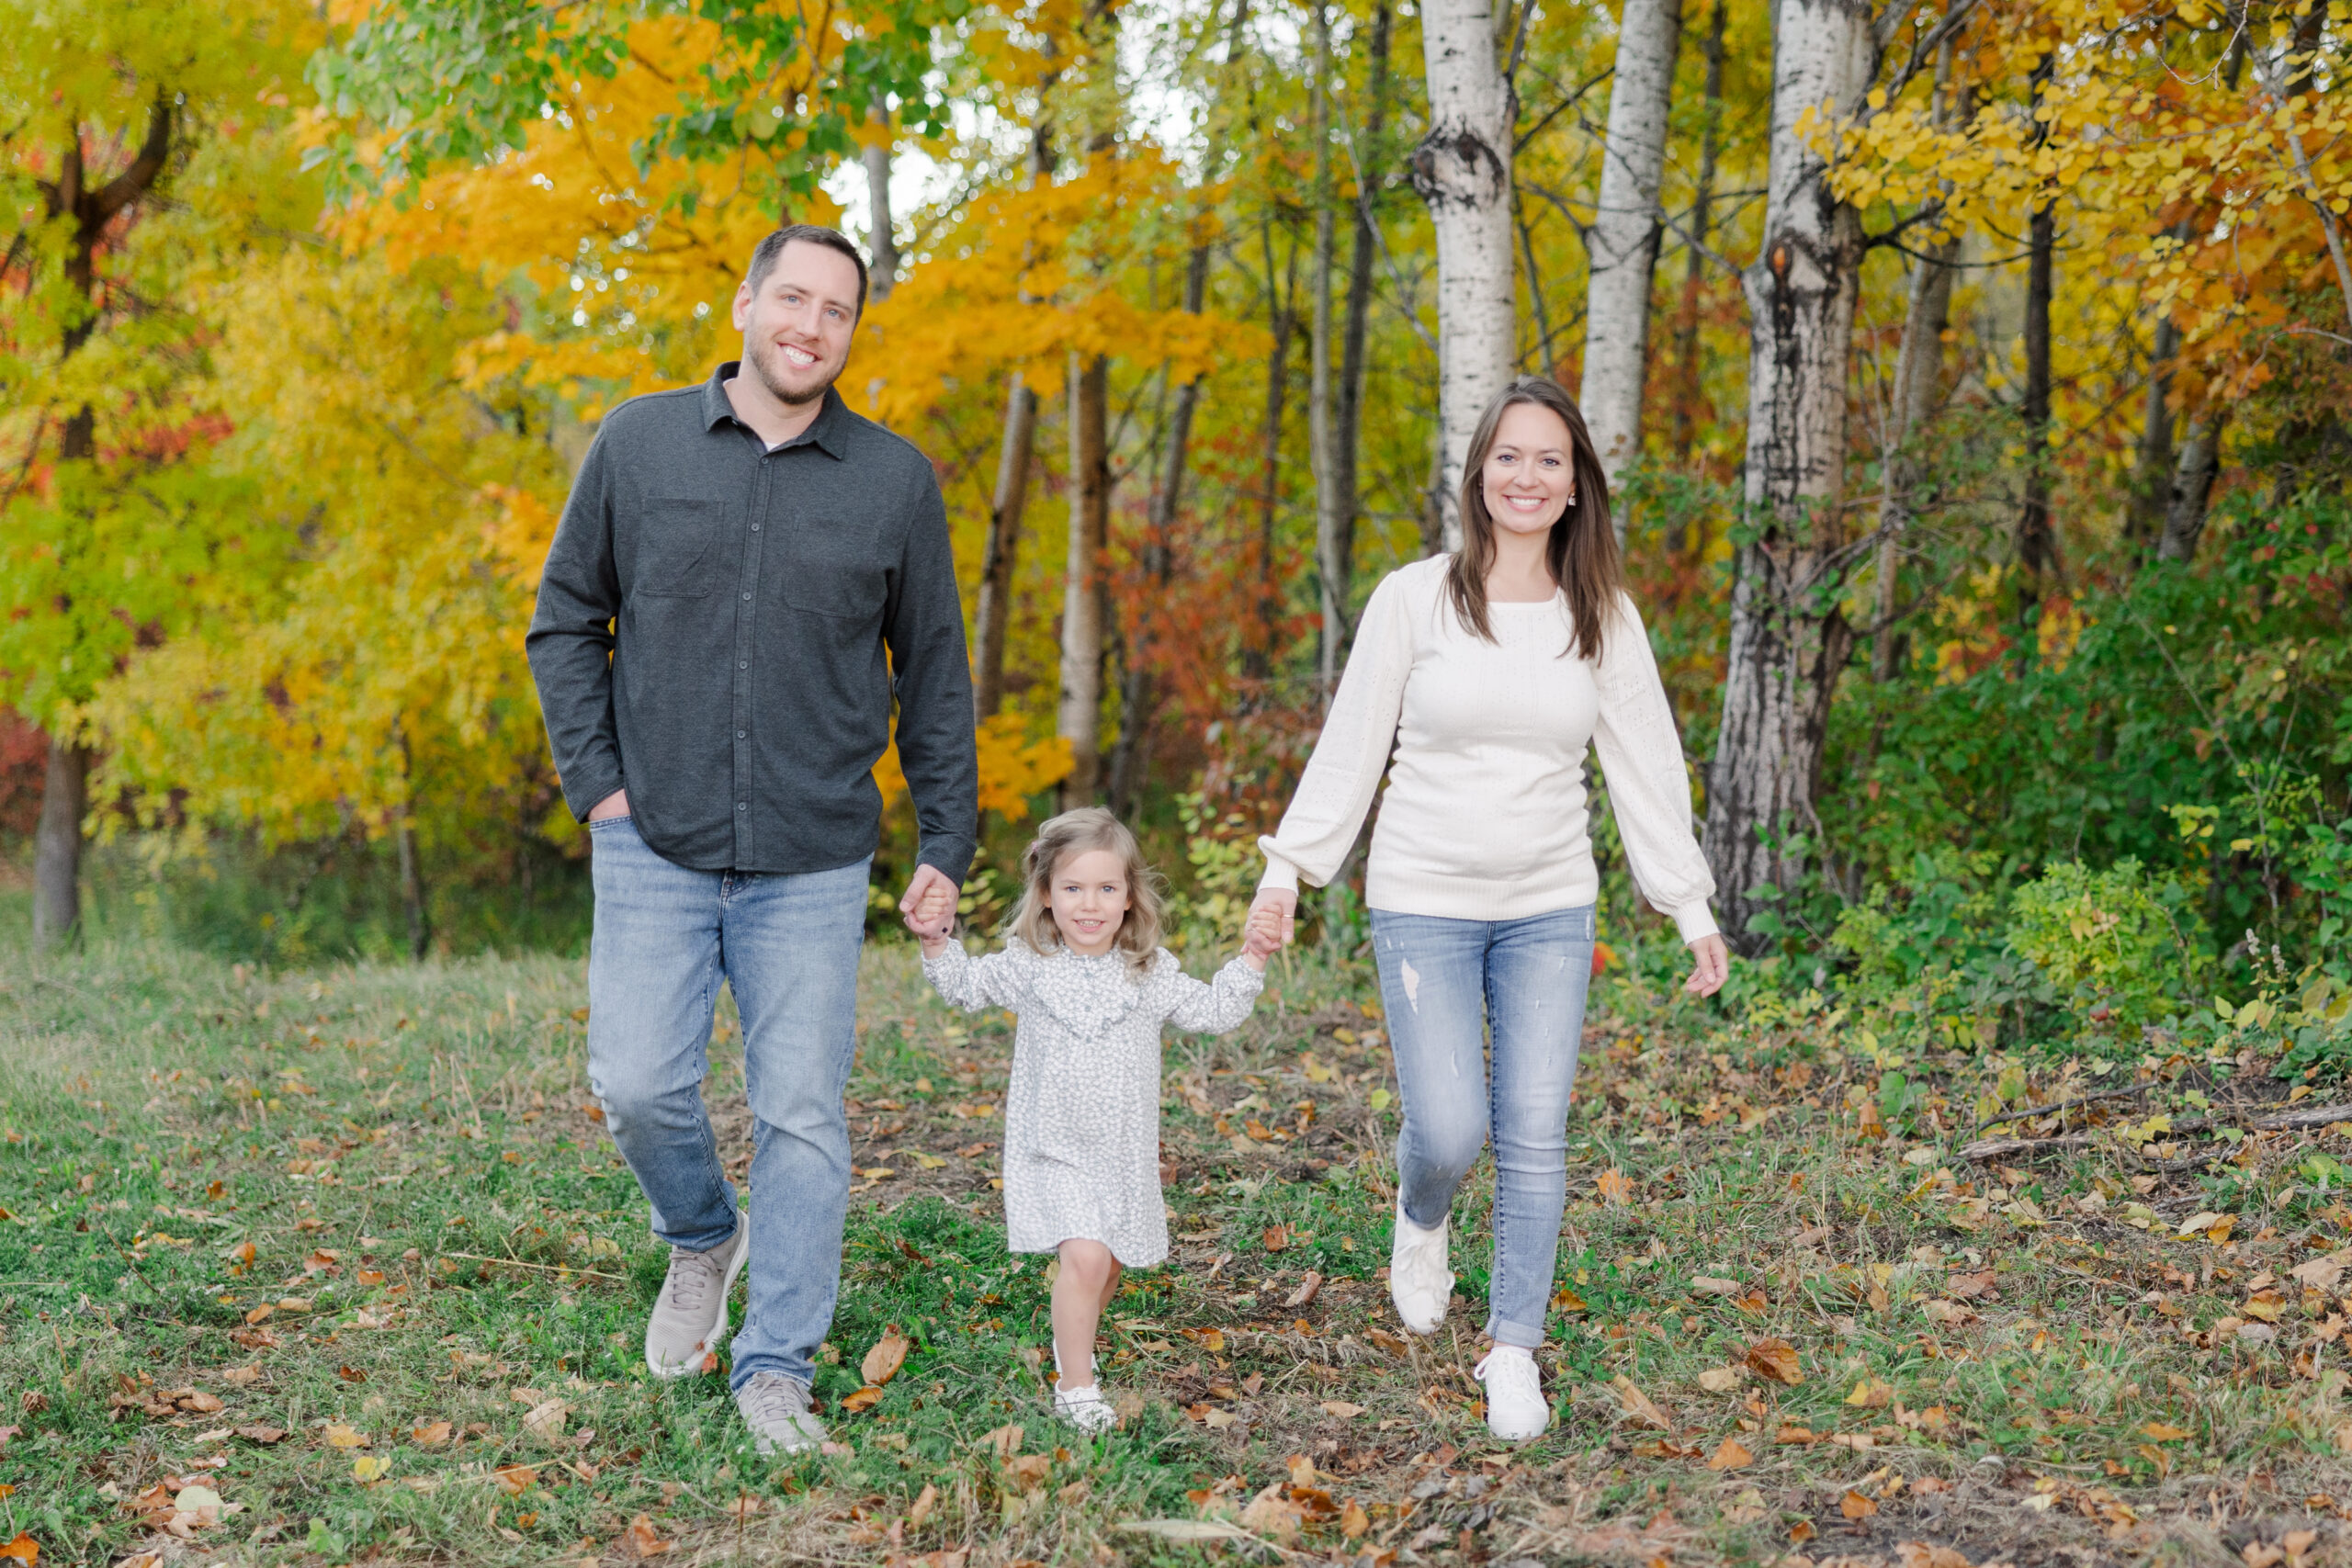 elm creek park reserve fall family portrait session in October